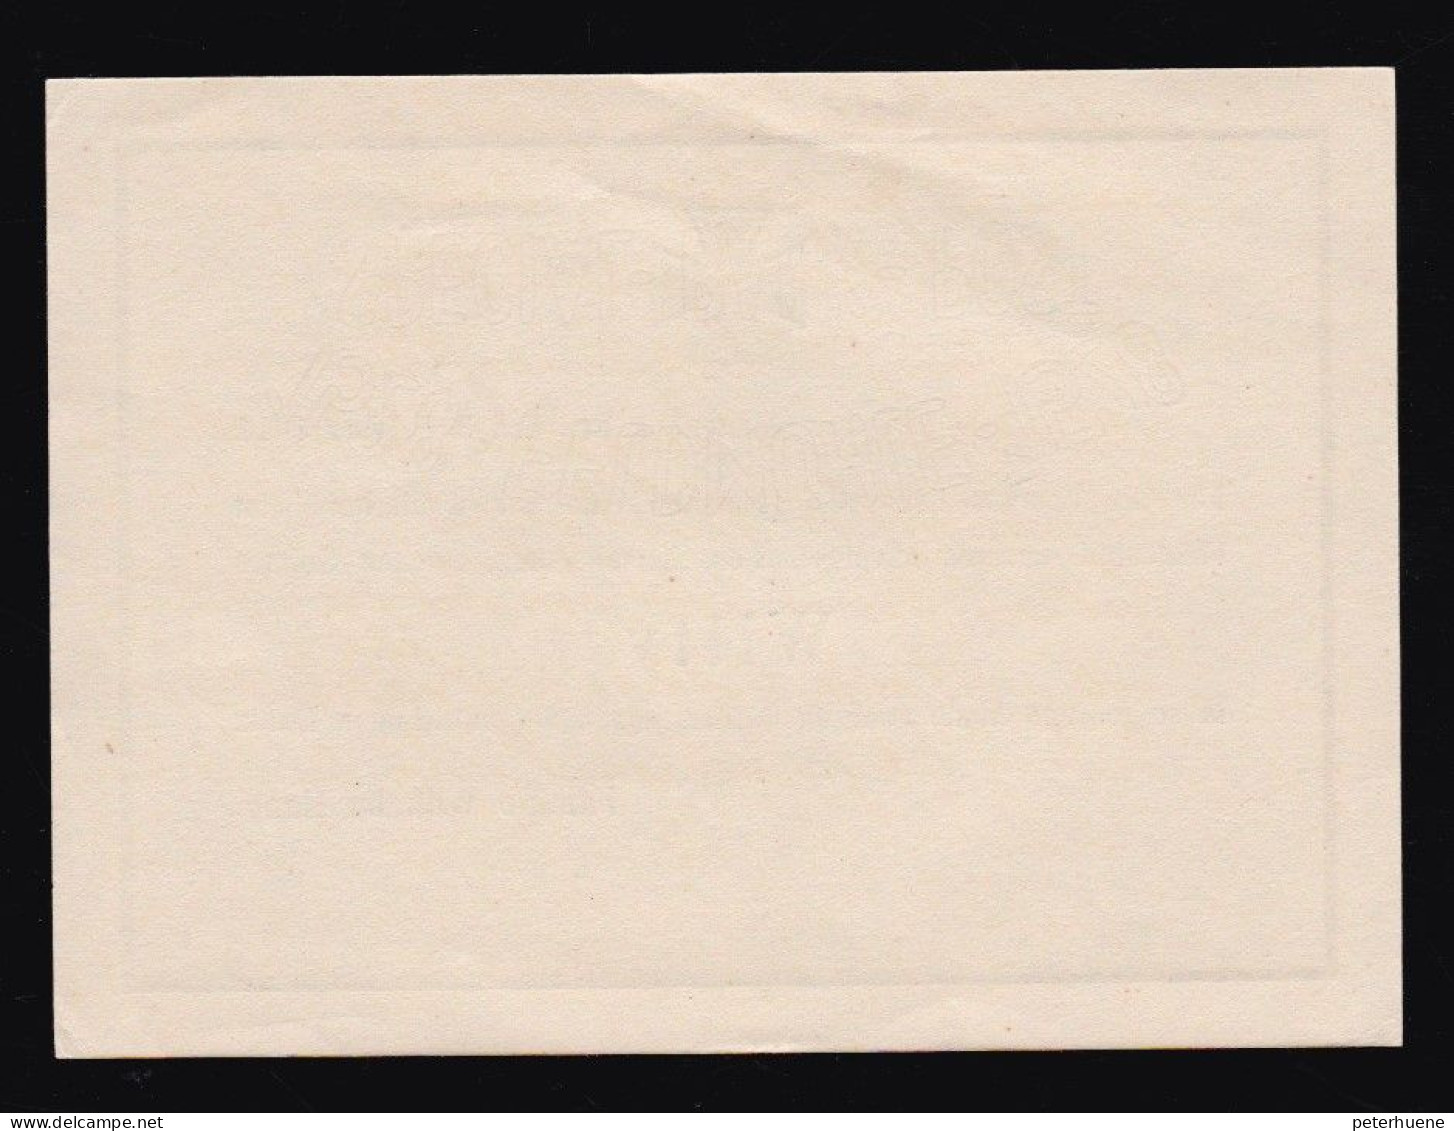 Drittes Reich. Danksagungskarte Heldentod Eines Soldaten. Giengen An Der Brenz, 3. Februar 1944. - 1939-45